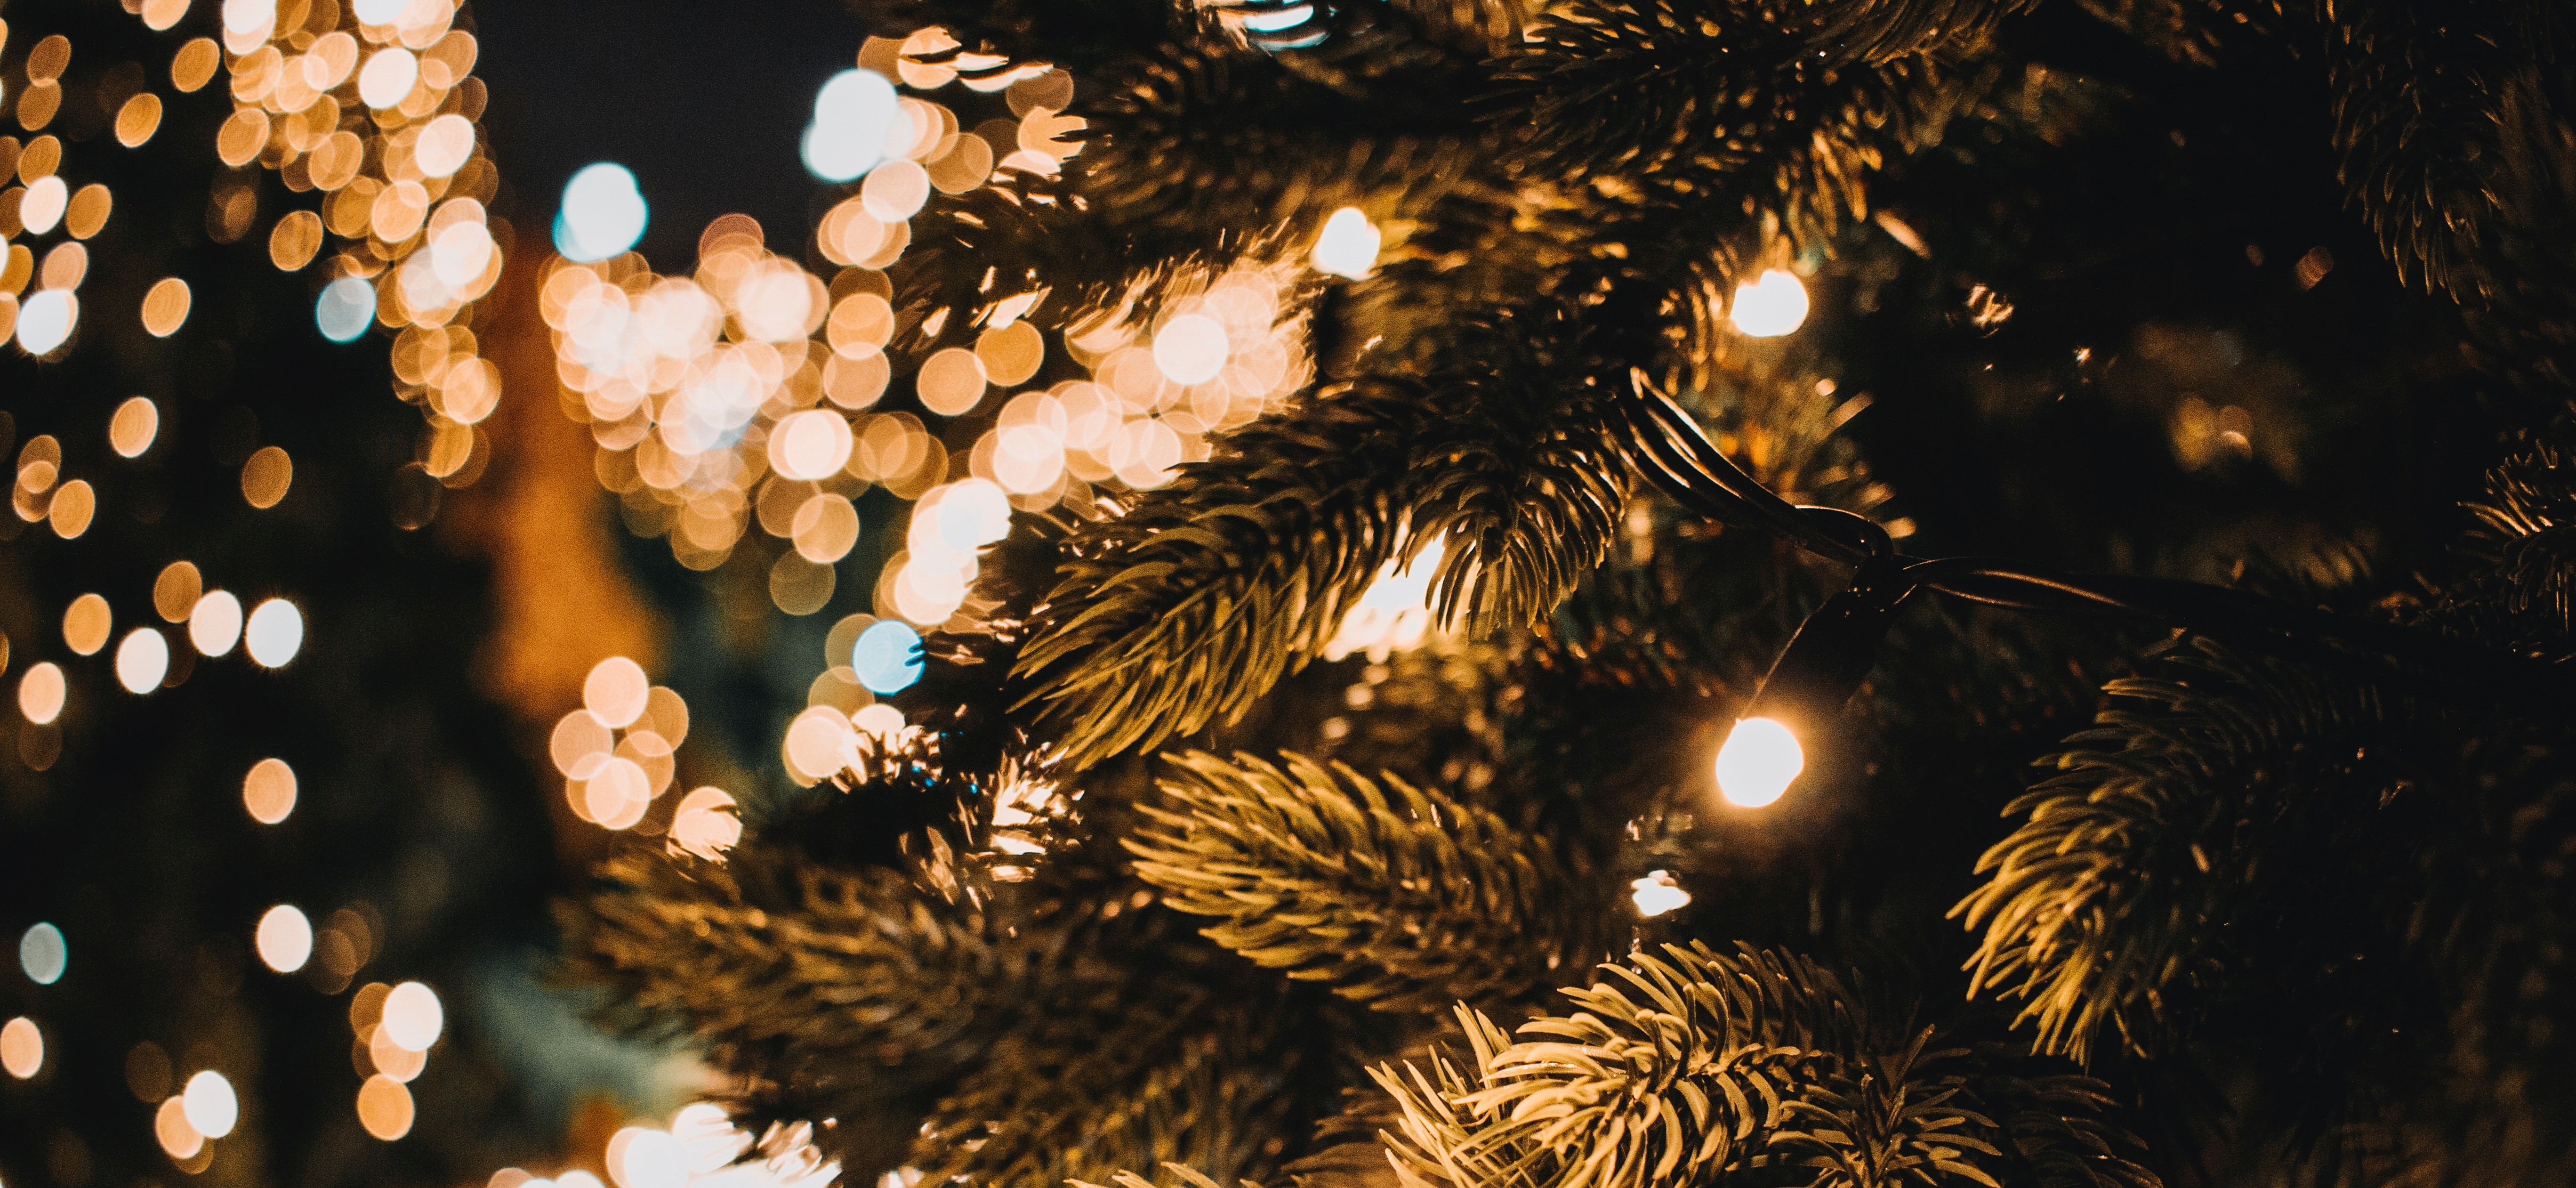 A christmas tree with lights